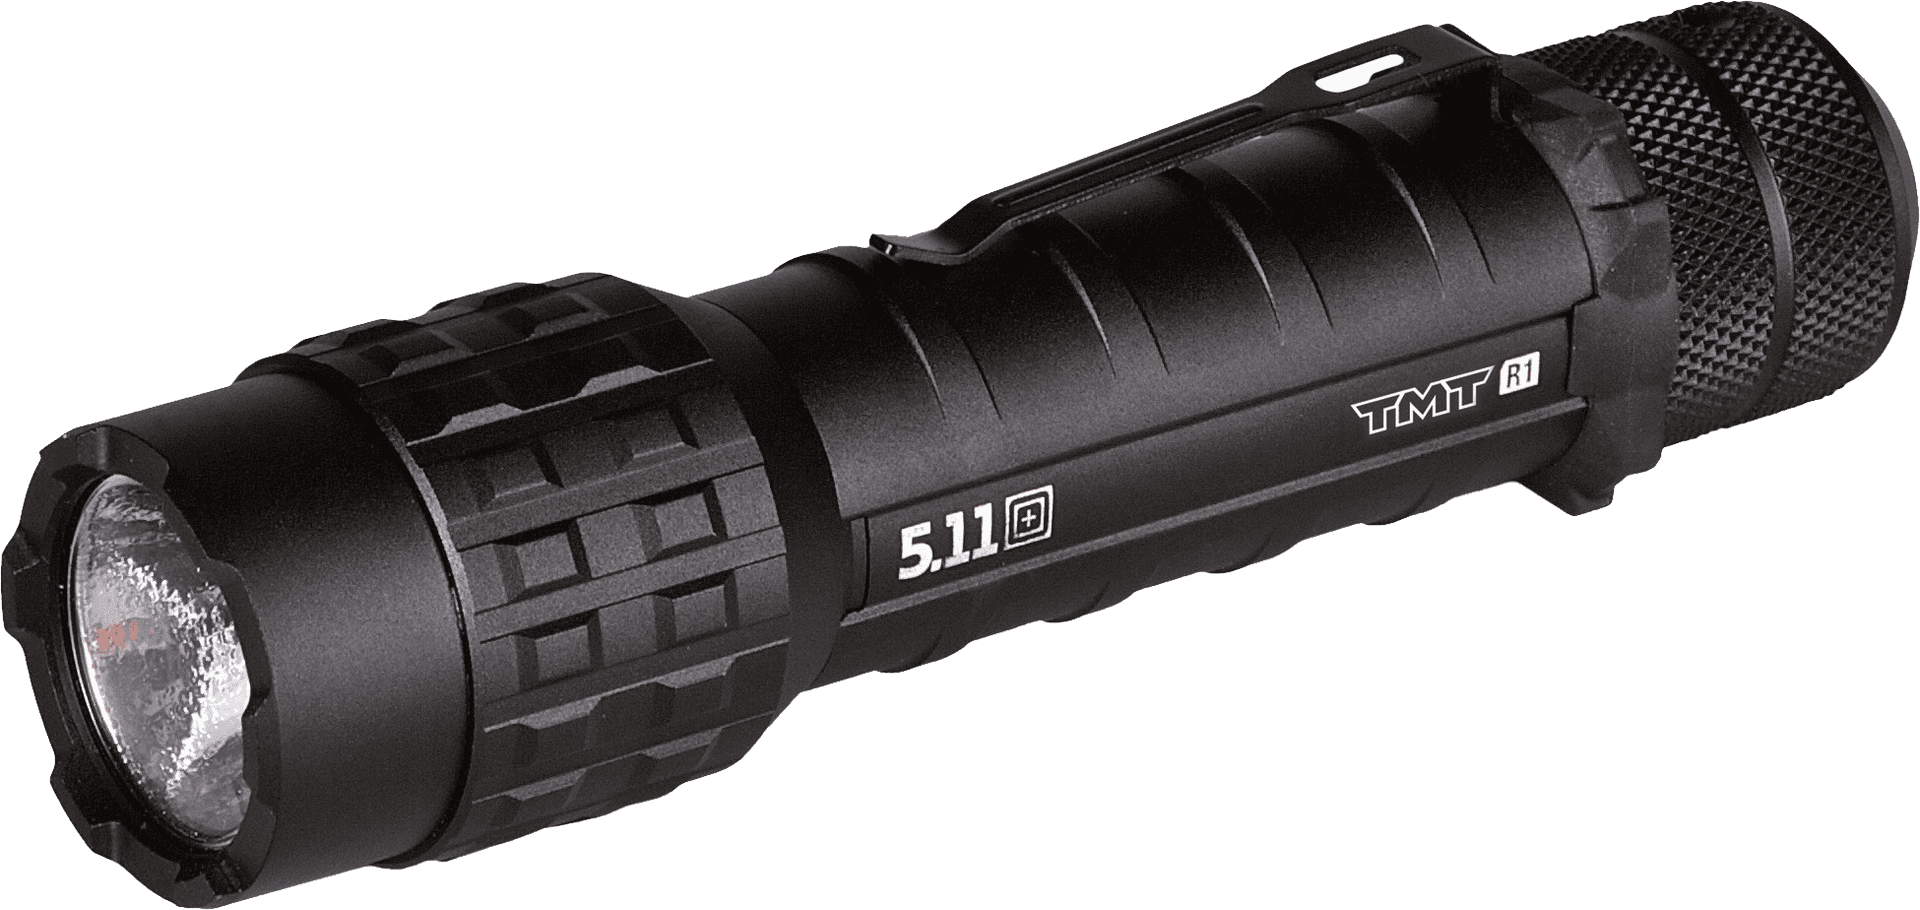 Tactical Flashlight5.11 T M T R1 PNG